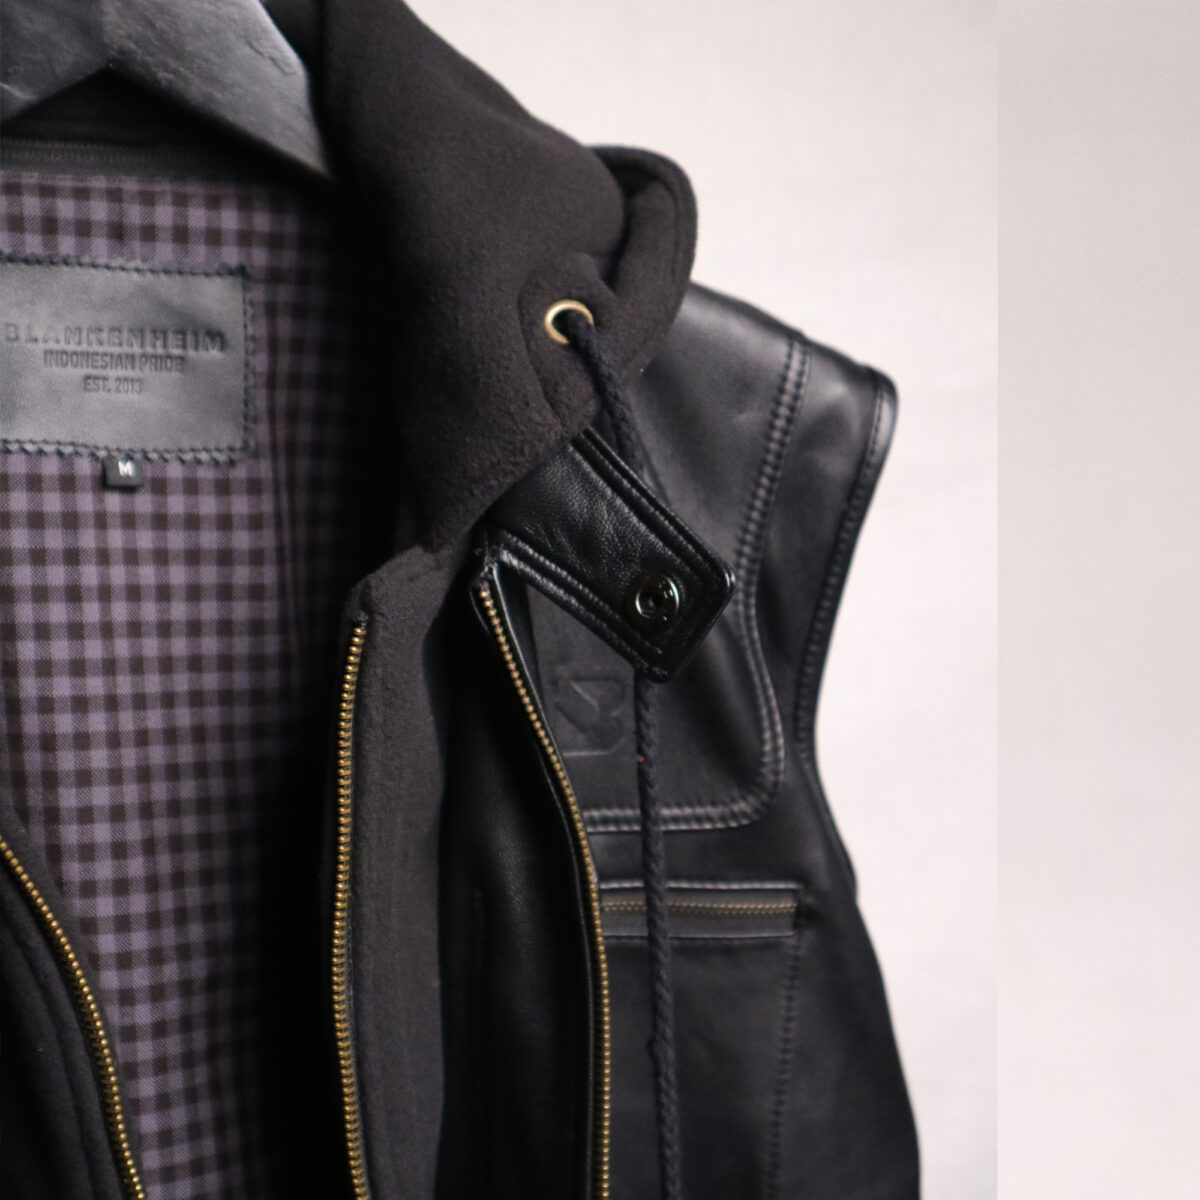 Blankenheim Leather Jacket Rompi Eckhard – Black (Size S M L XL)